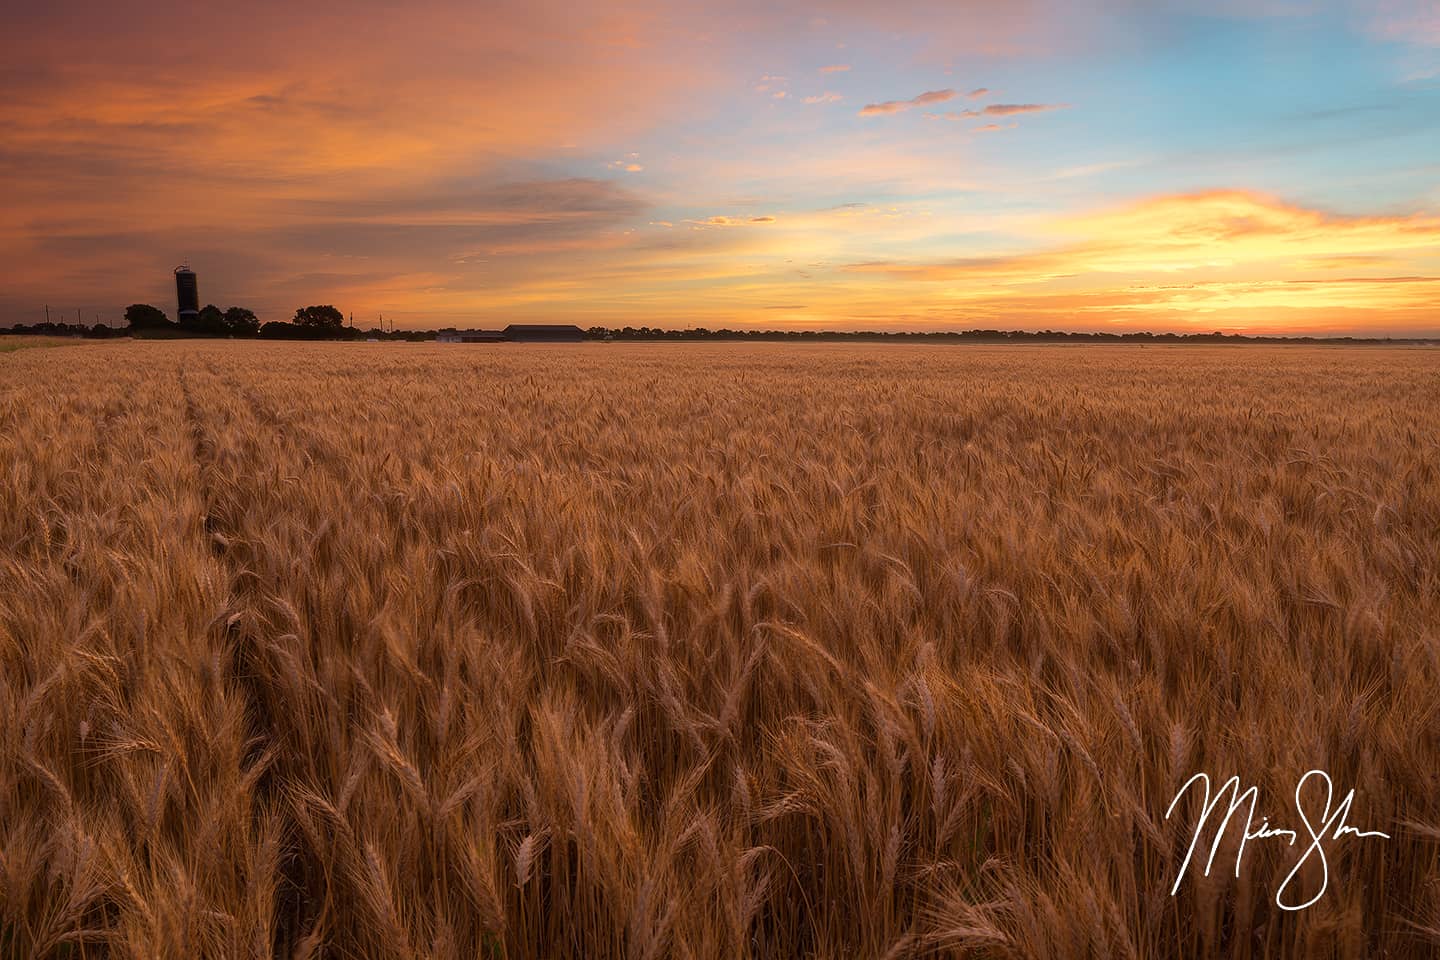 South Central Kansas - The Sunrise Before Harvest